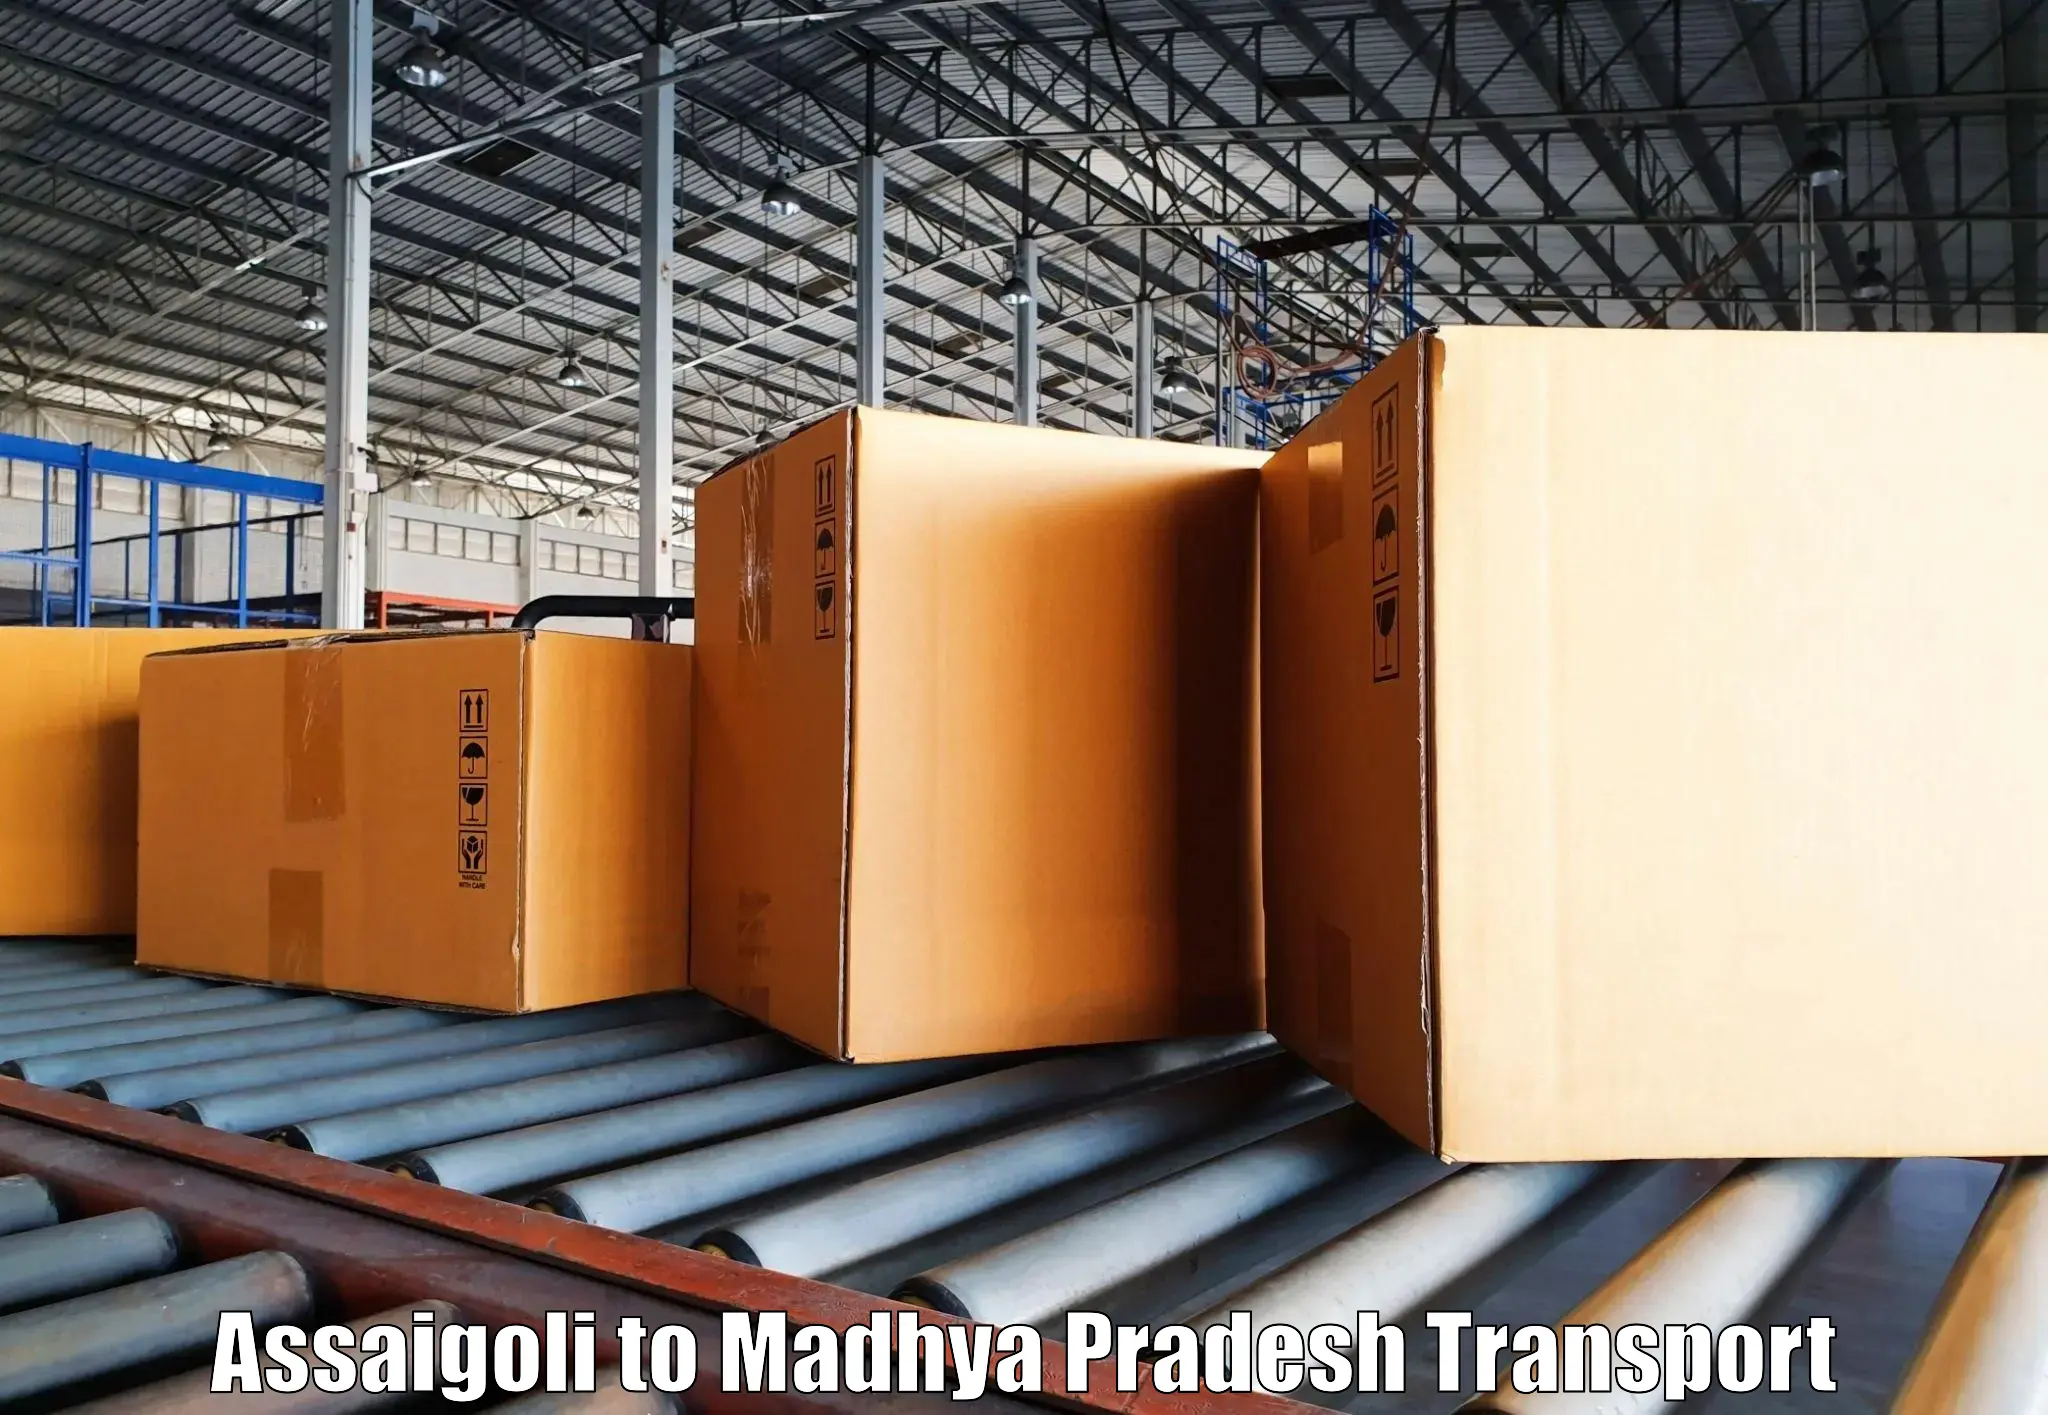 Shipping partner Assaigoli to Raghogarh